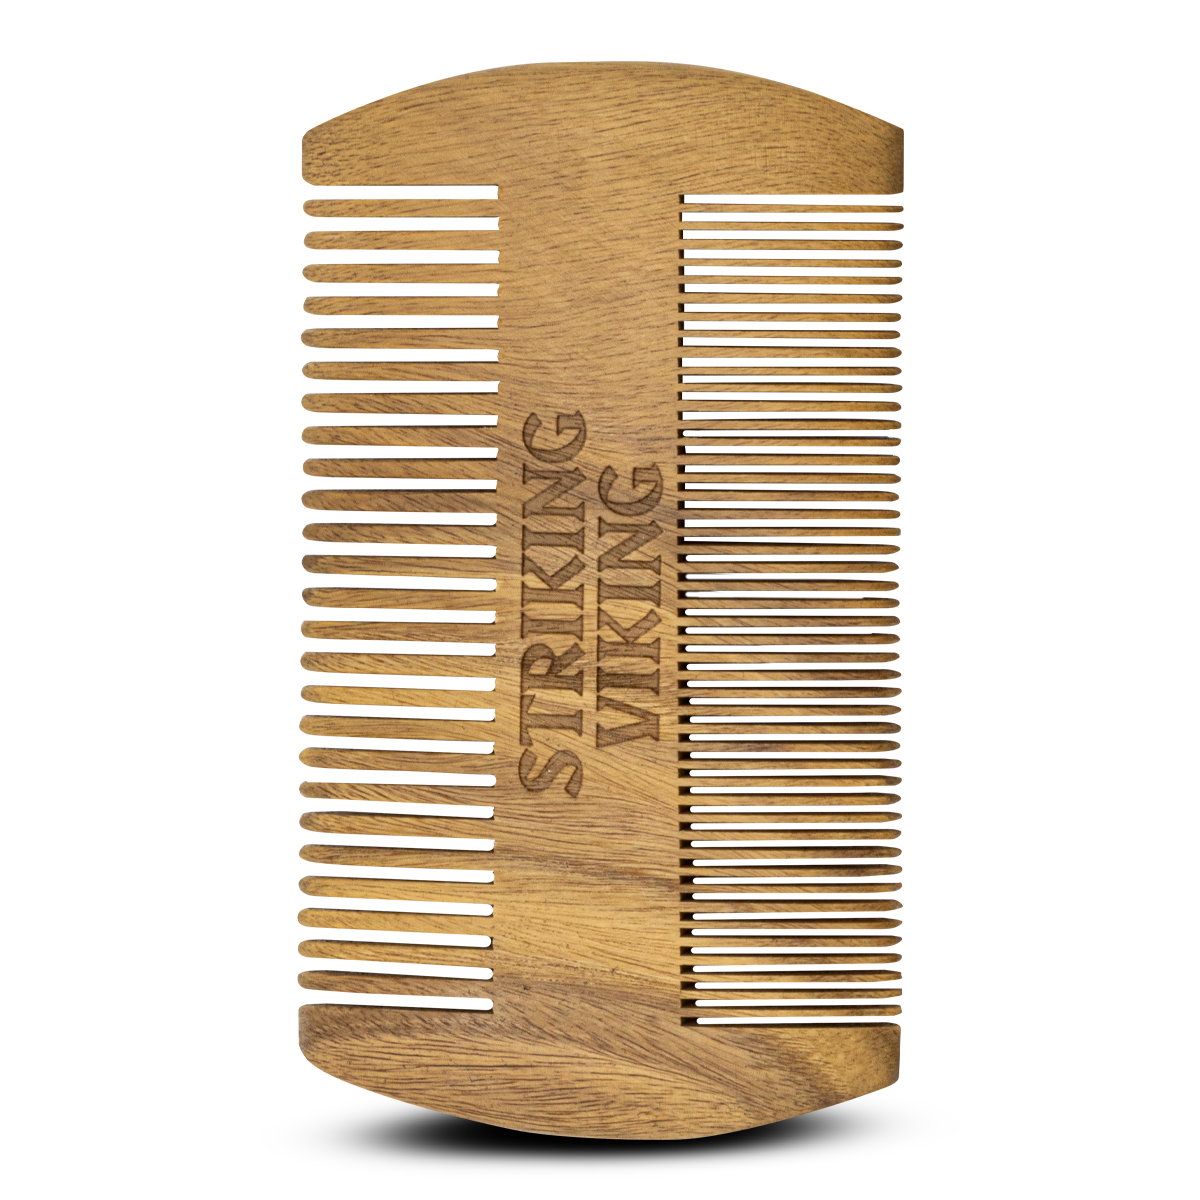 Sandalwood Wooden Beard Comb (Black)